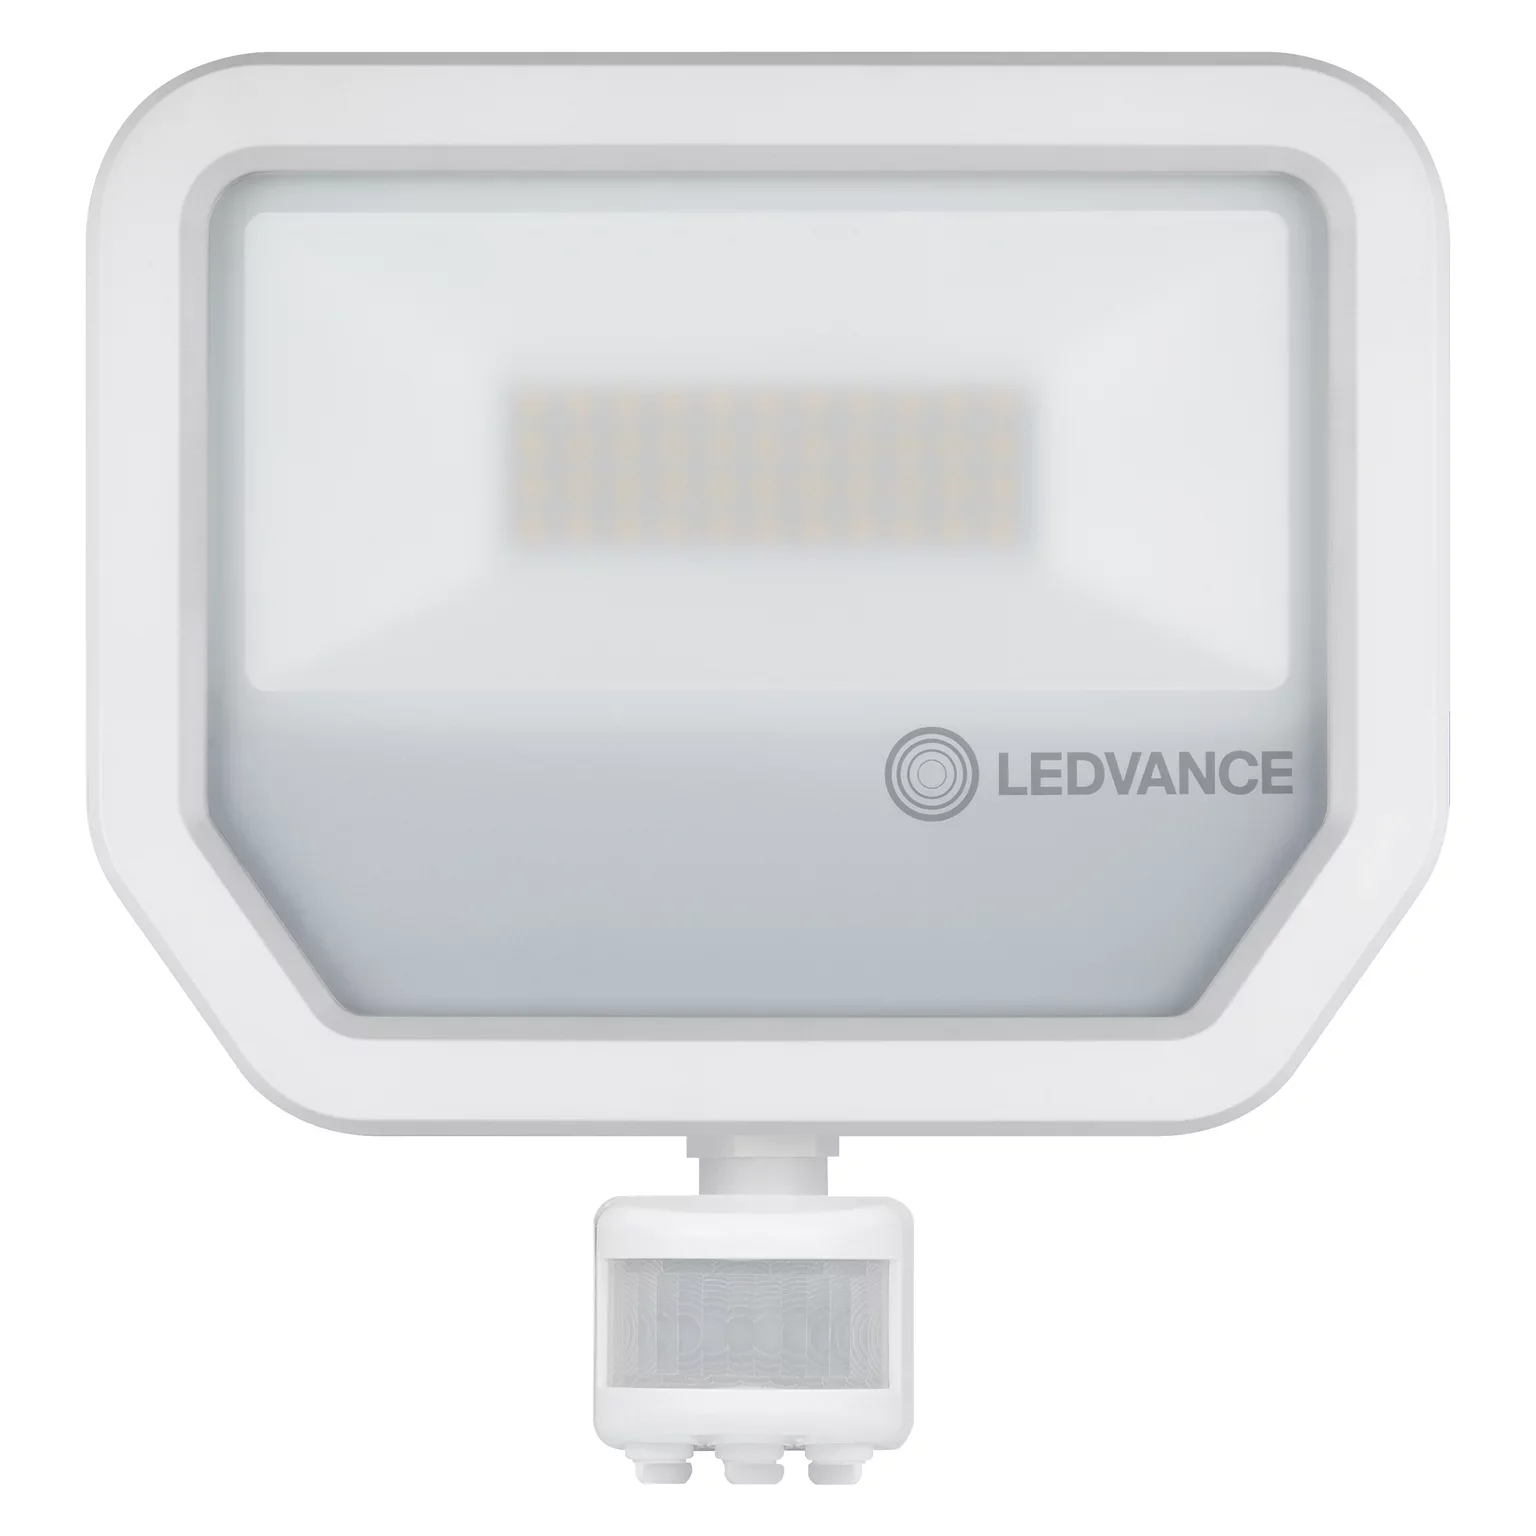 LED prožektorius LEDVANCE FL PFM, IP65, 50W 4000K 6000lm, su judesio davikliu, baltos sp. - 2